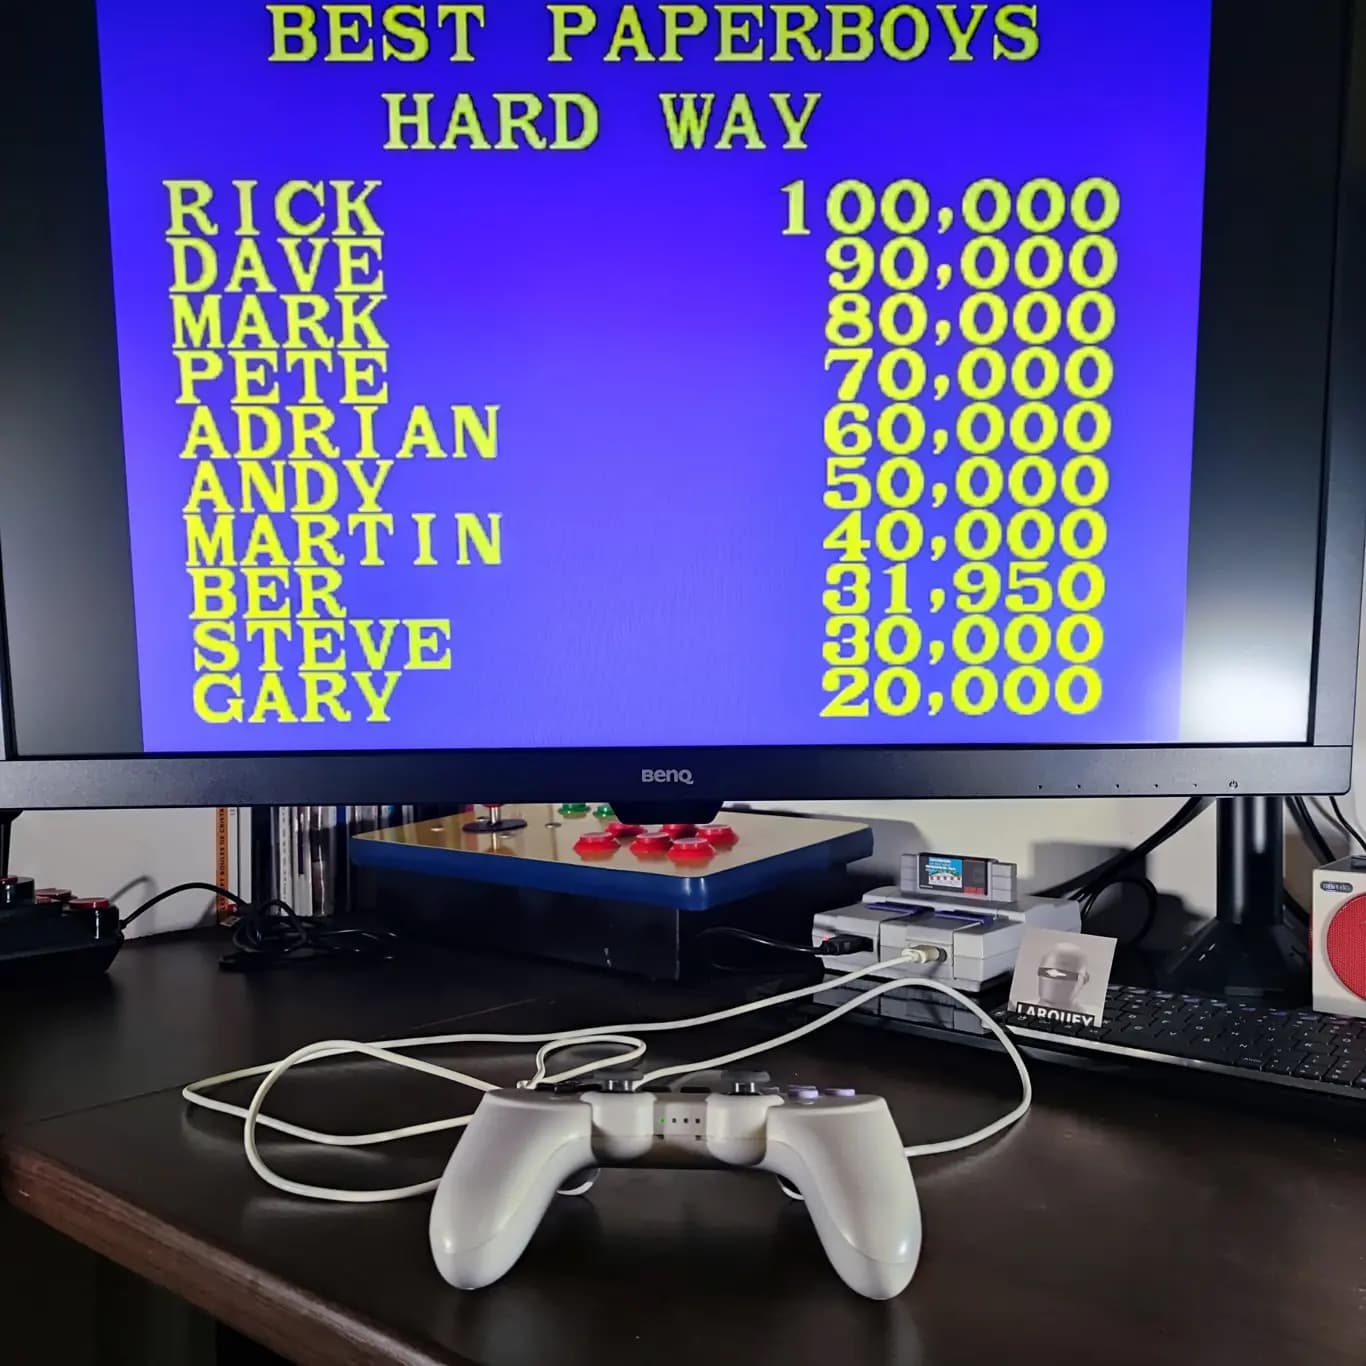 Larquey: Paper Boy: Hard Way [Easy] (Sega Genesis / MegaDrive Emulated) 31,950 points on 2022-09-24 10:45:55